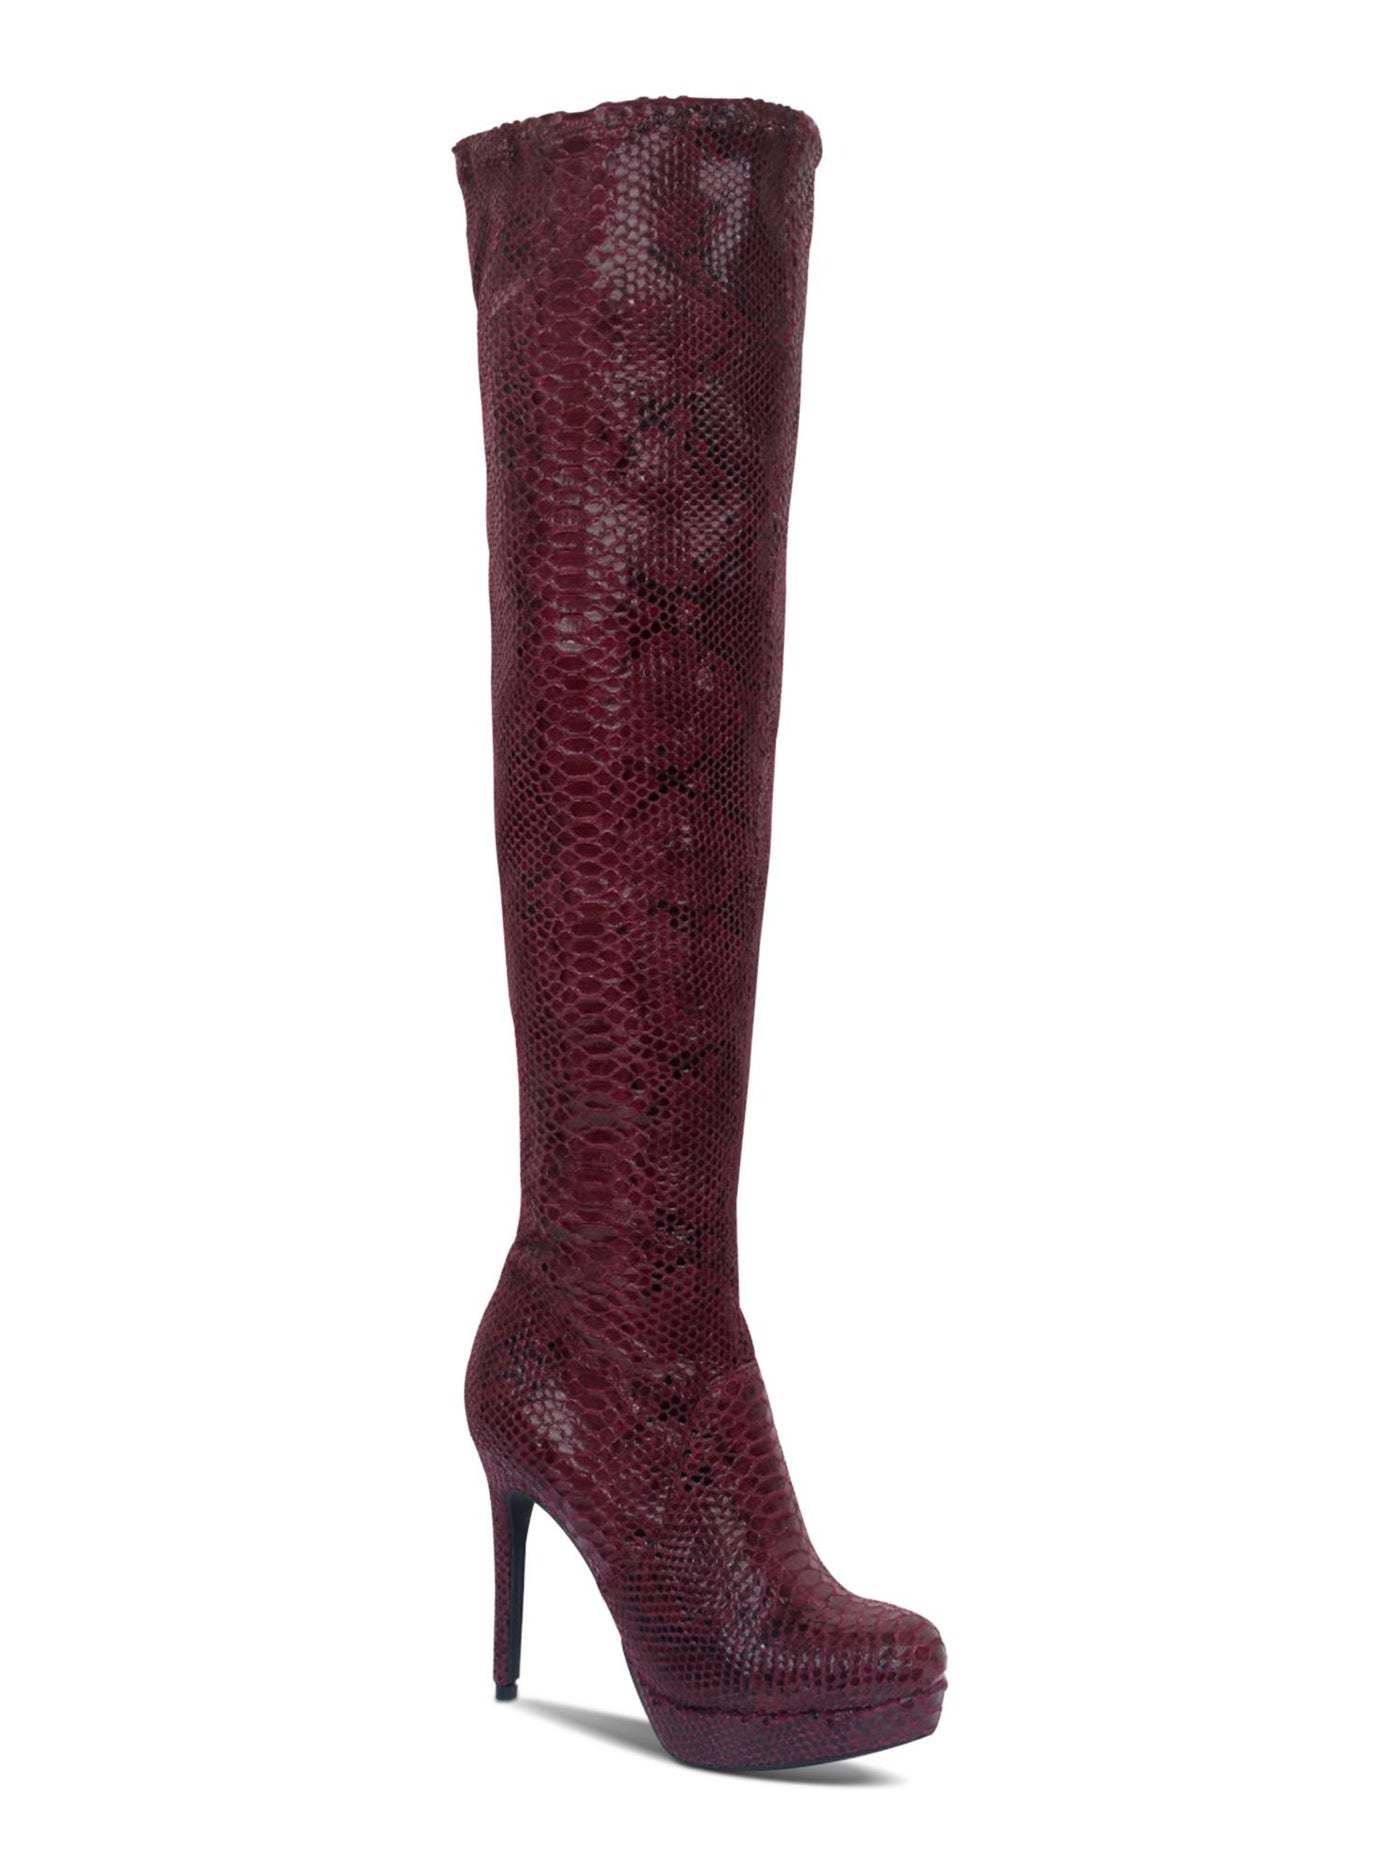 THALIA SODI Womens Burgundy Animal Print Platform Round Toe Stiletto Zip-Up Dress Boots 7.5